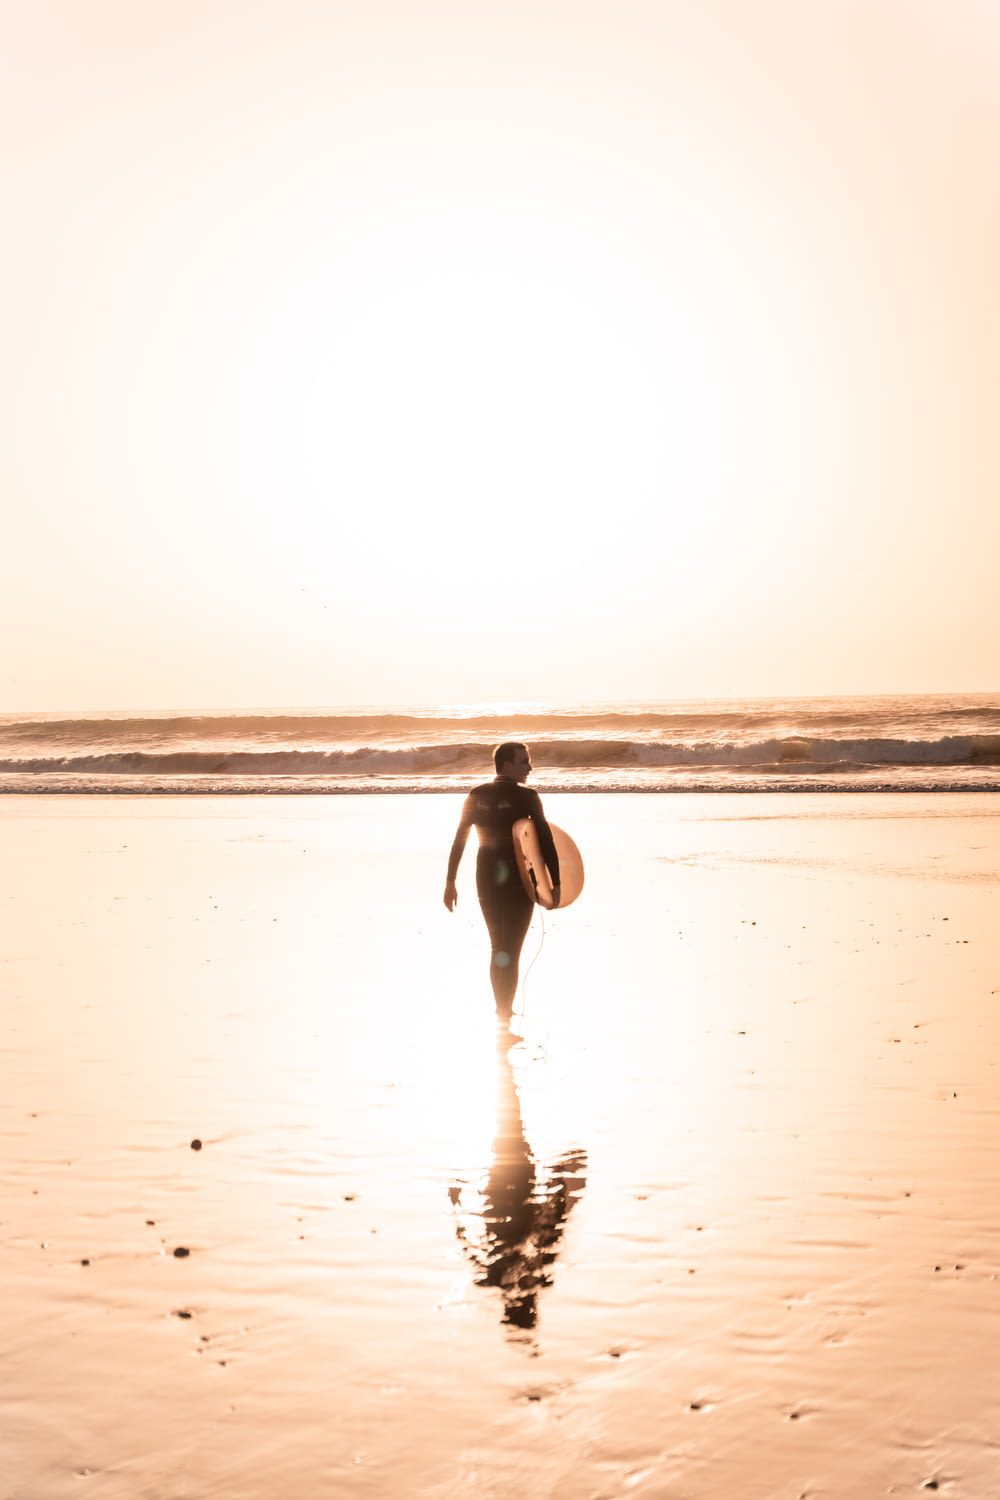 a person walking on a beach